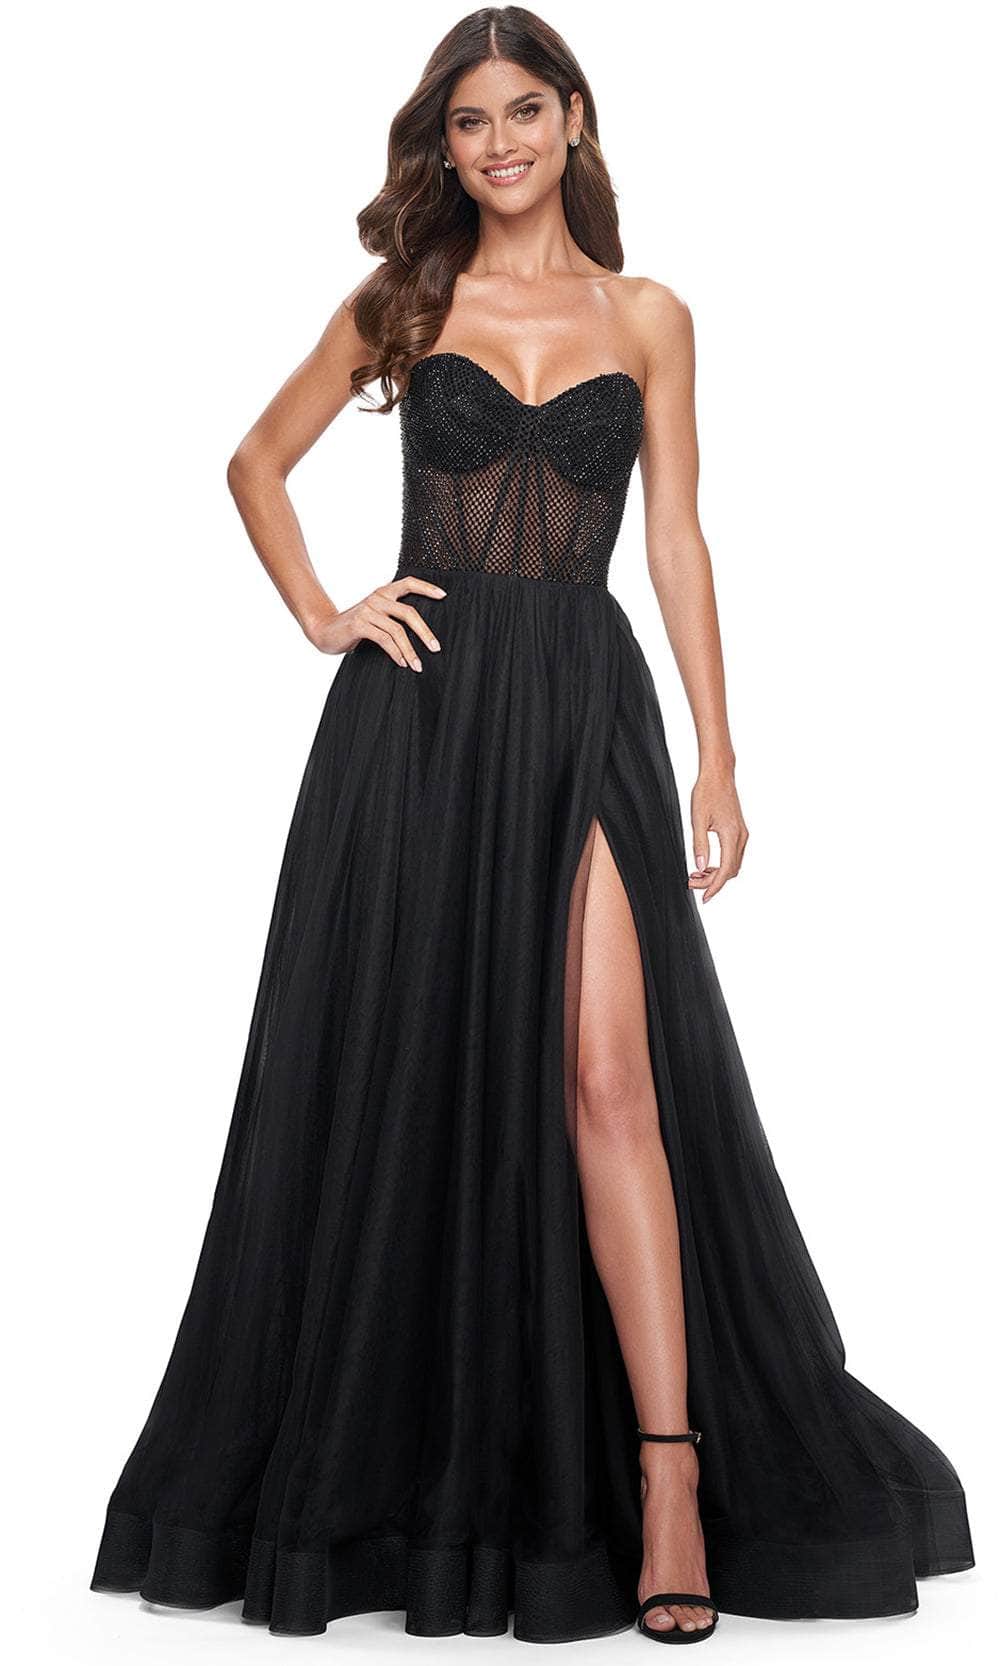 La Femme 32216 - Fishnet A-Line Prom Dress
